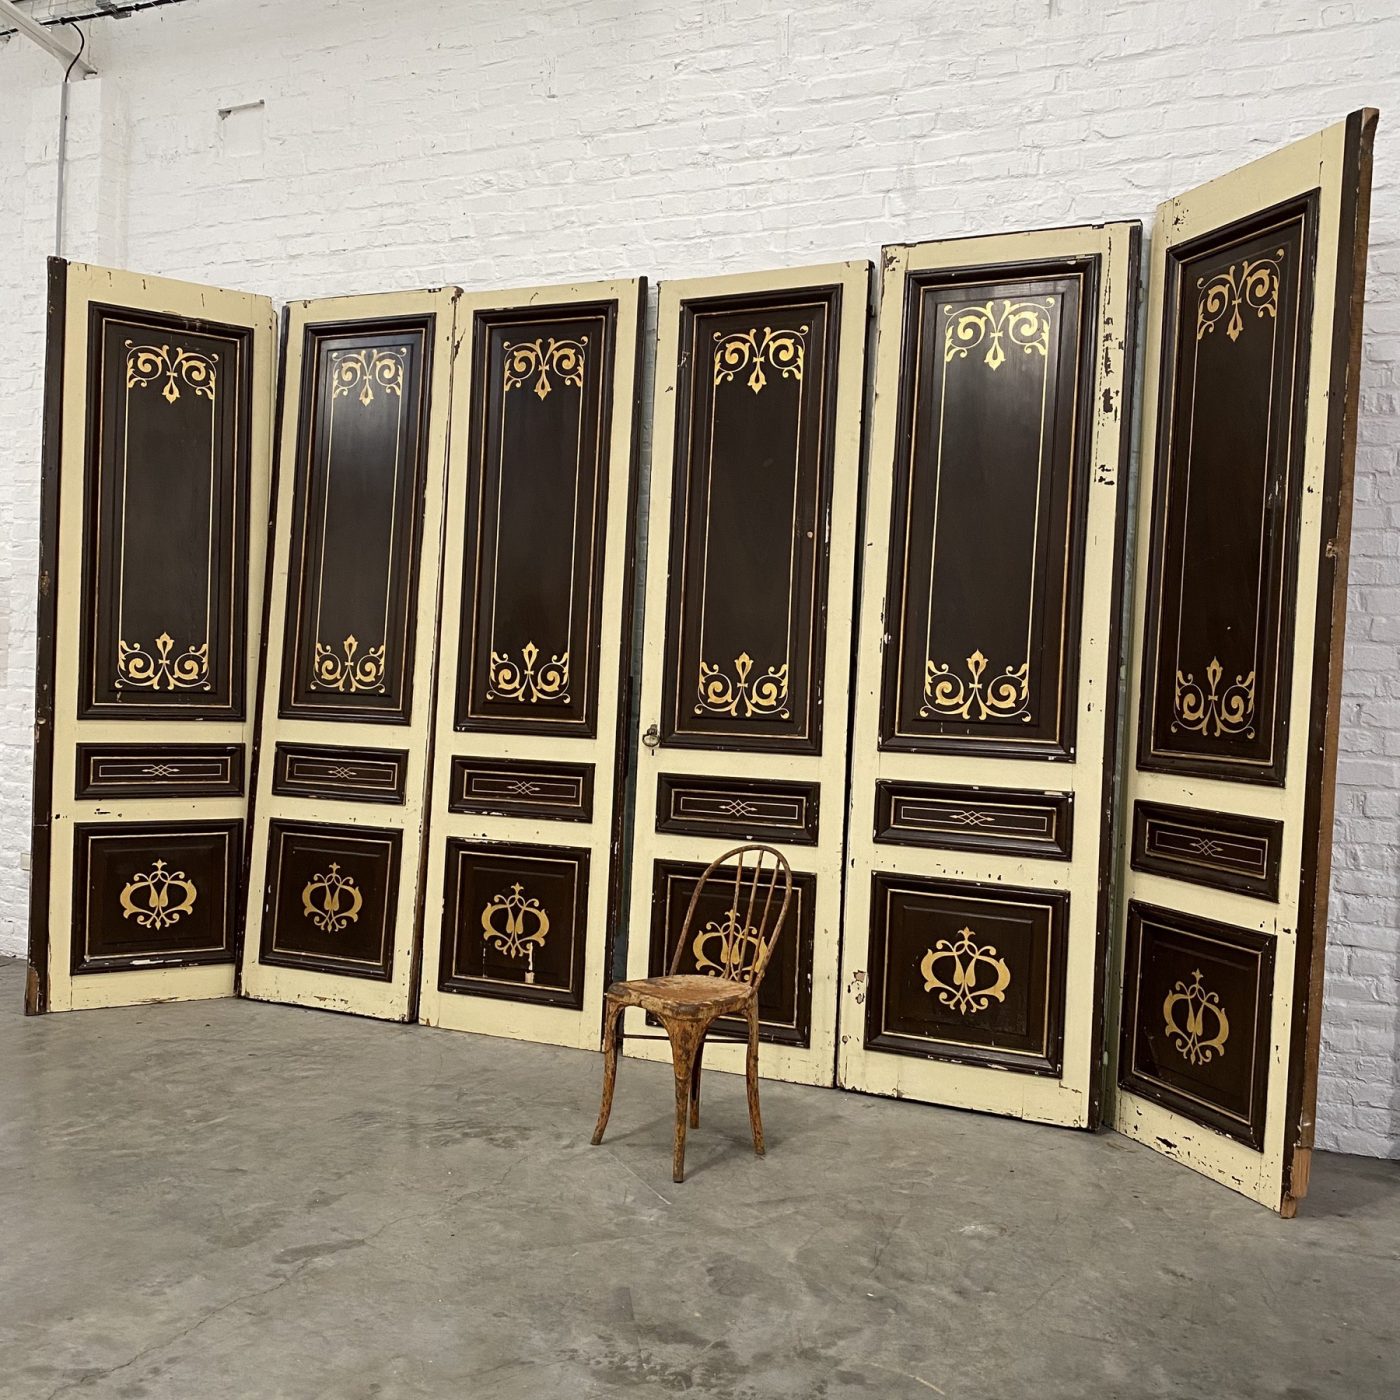 objet-vagabond-painted-doors0004